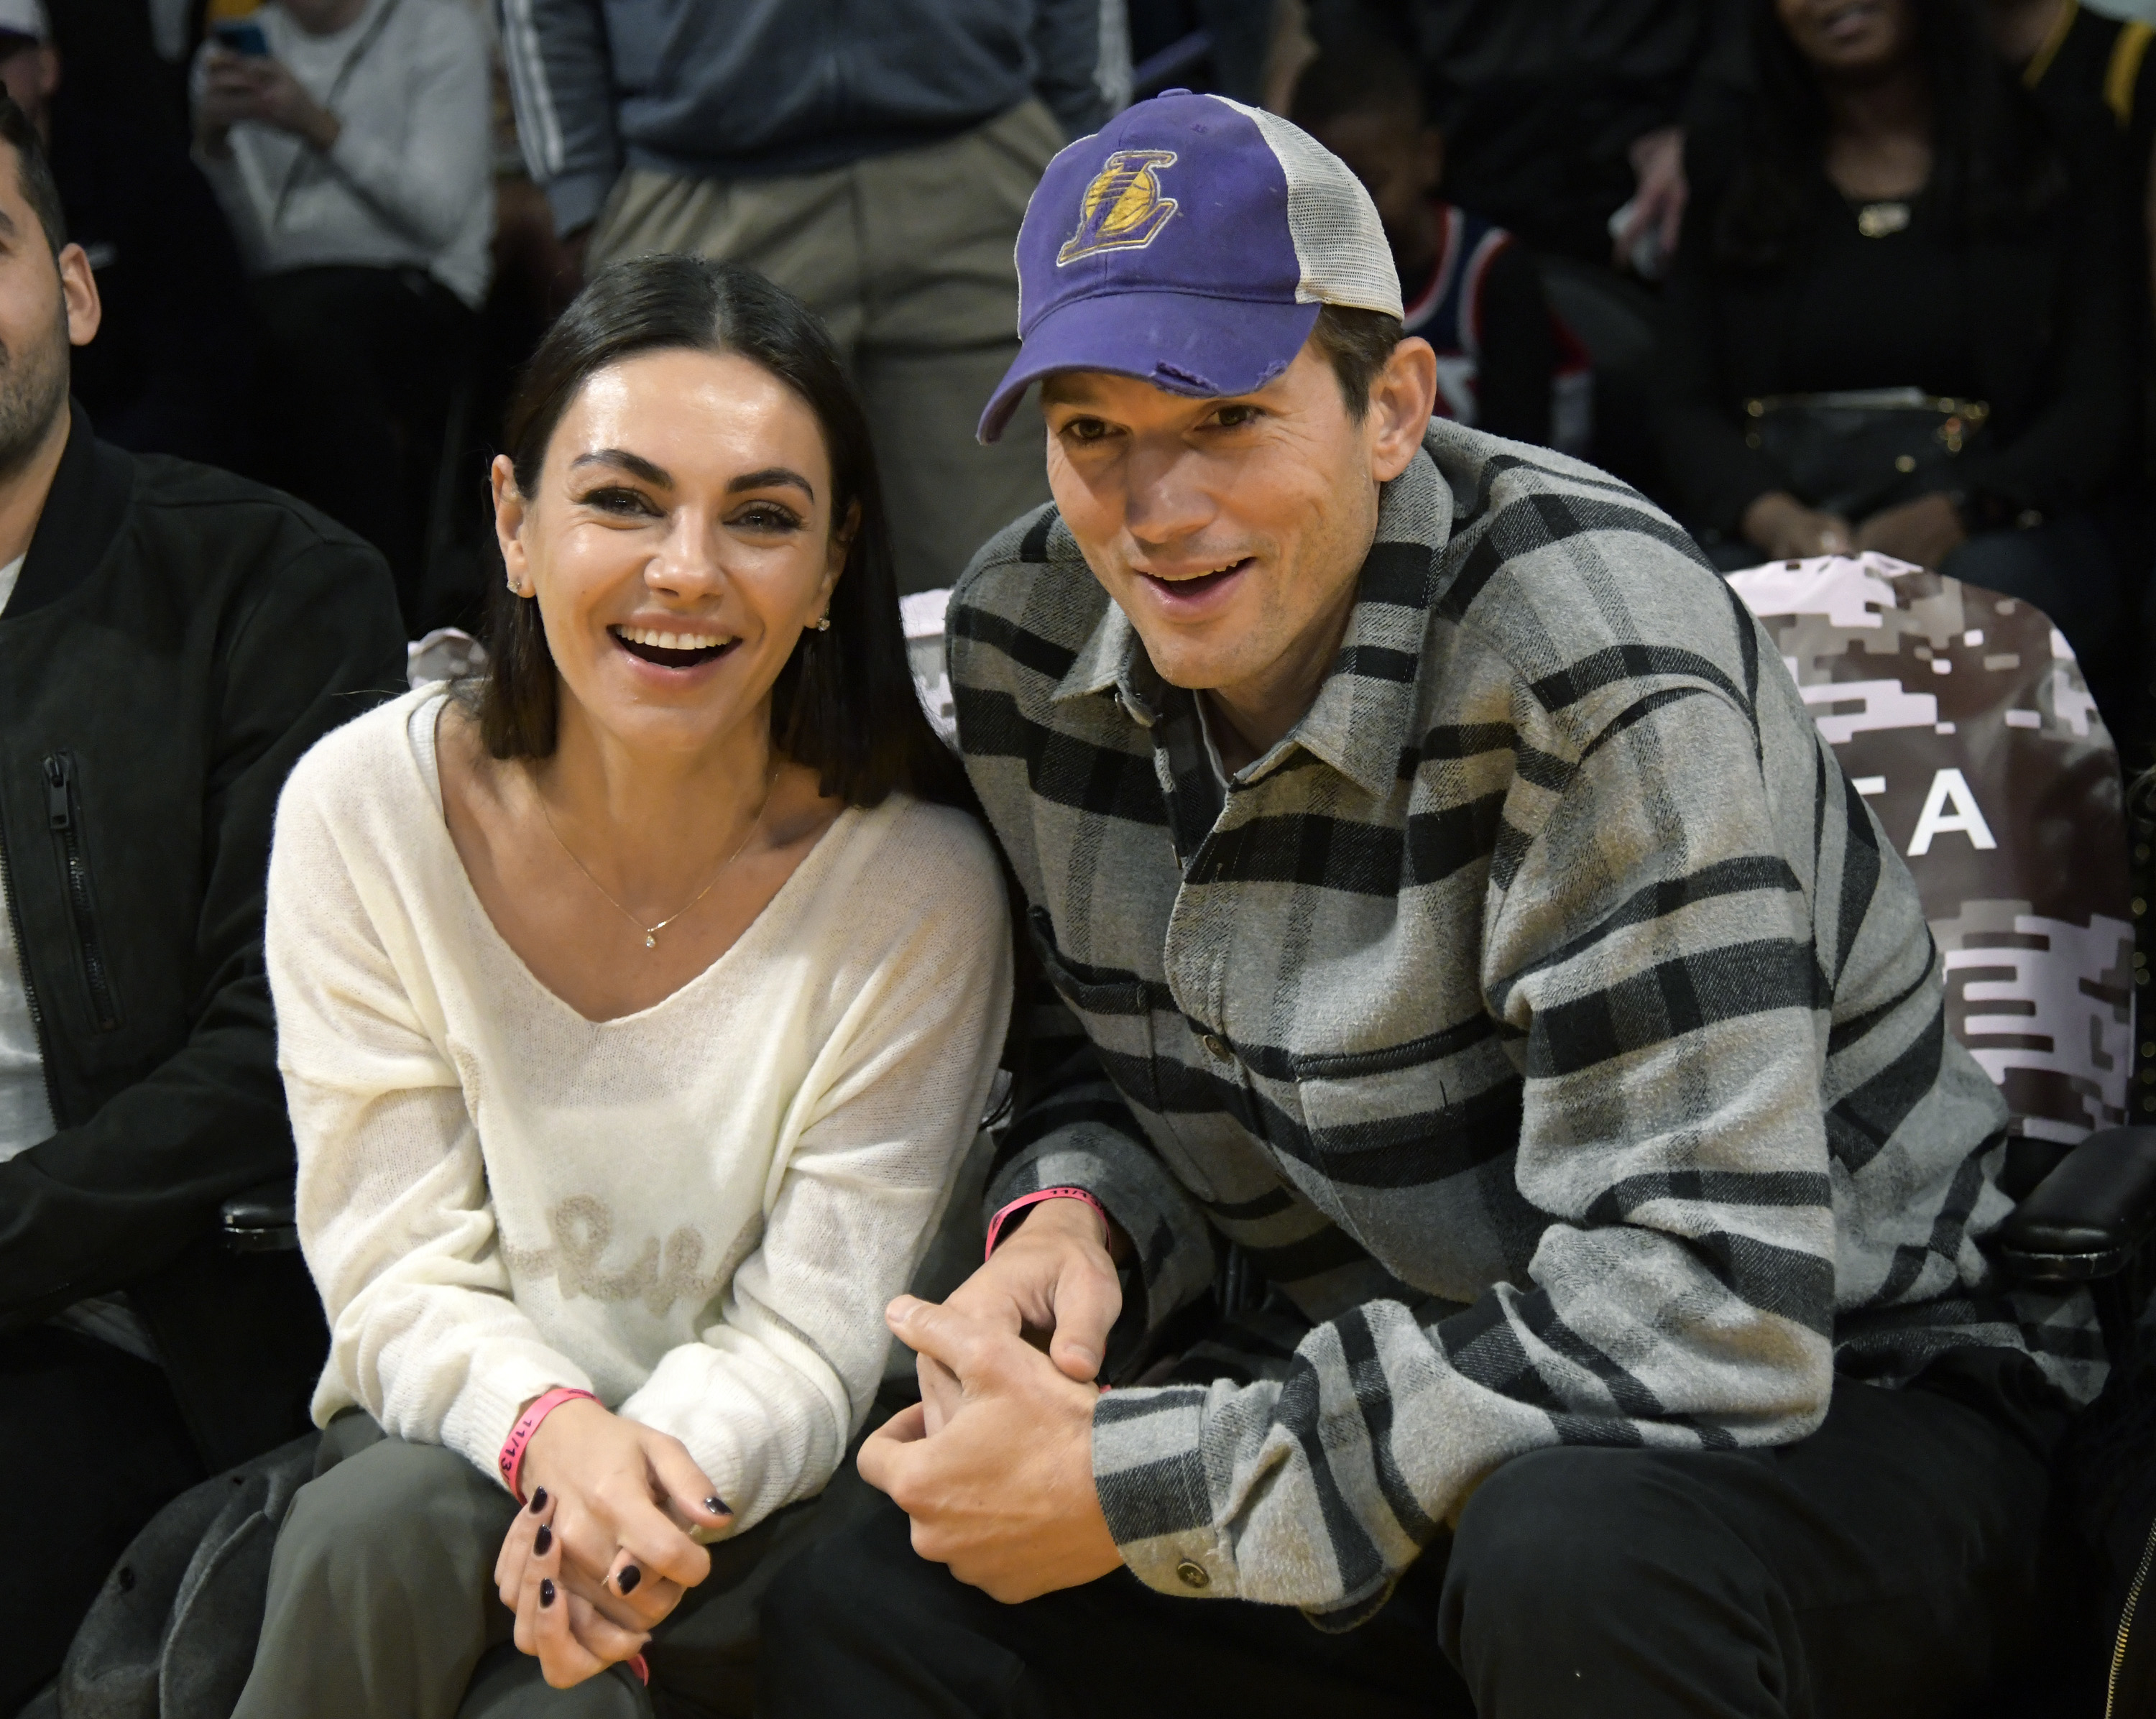 Mila Kunis and Ashton Kutcher sitting courtside at a basketball game